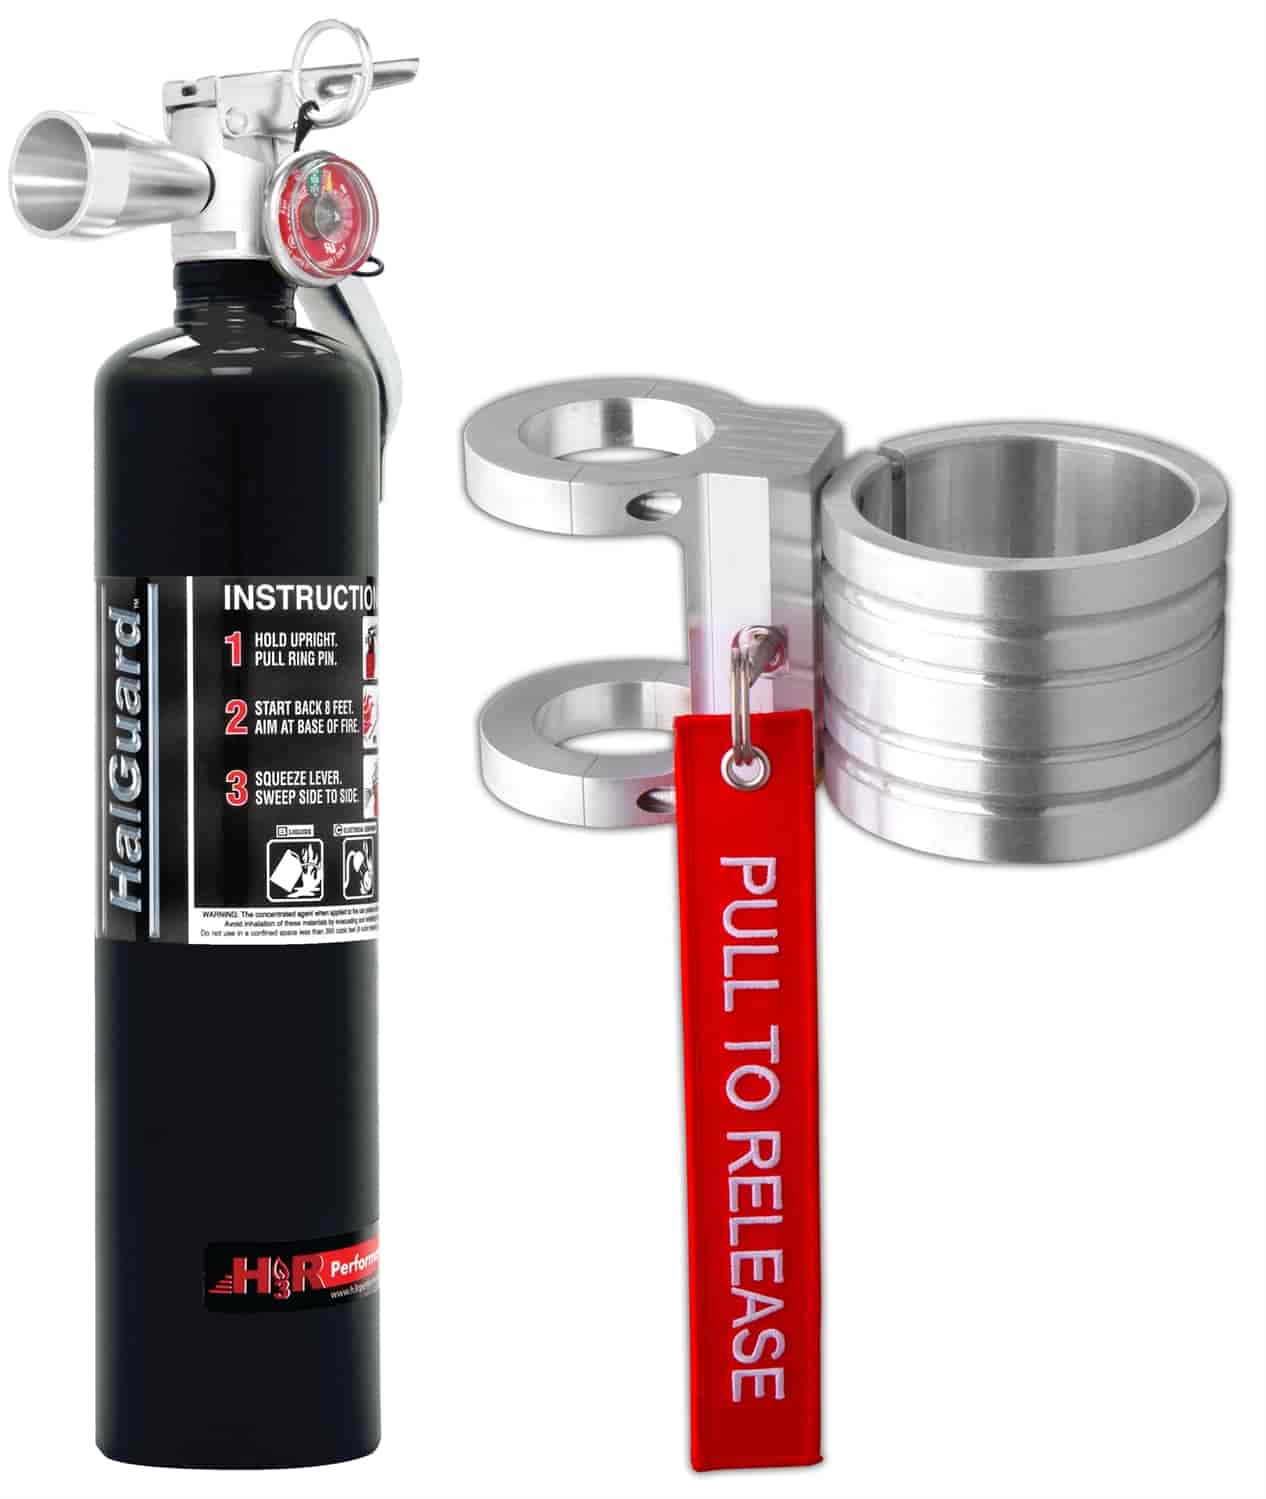 HalGuard Clean Agent Fire Extinguisher Black Kit